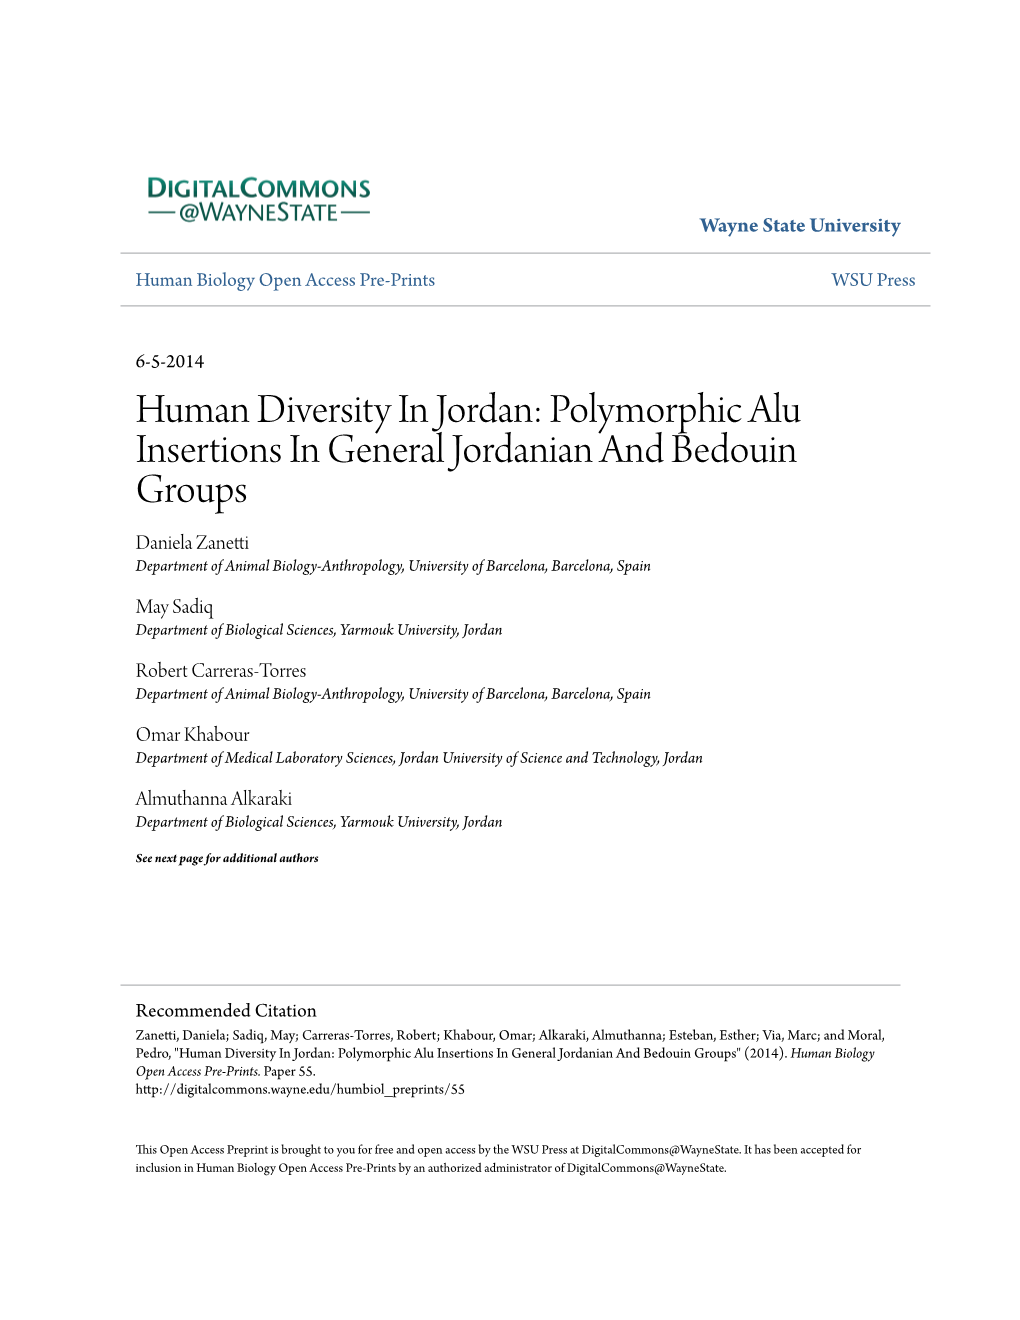 Human Diversity in Jordan: Polymorphic Alu Insertions In